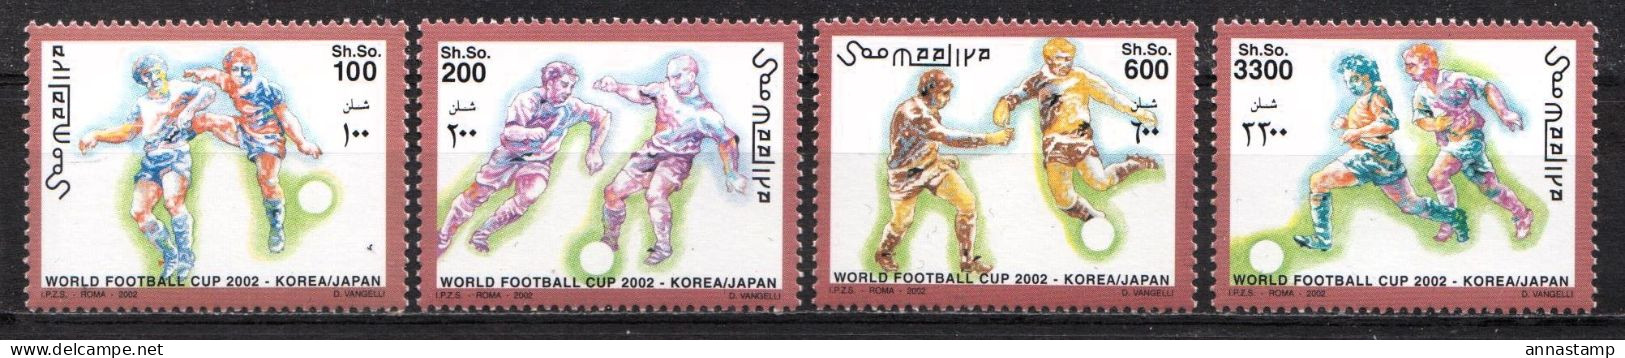 Somalia MNH Set - 2002 – South Korea / Japan